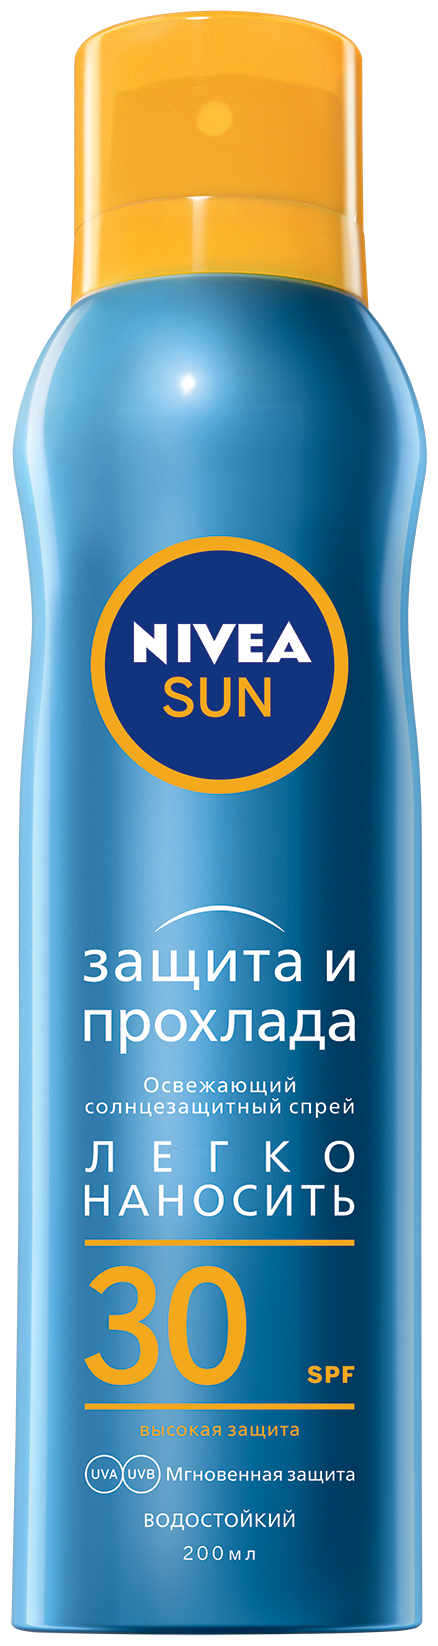 NIVEA Sun освежающий солнцезащитный спрей Защита и прохлада SPF 30 SPF 30, 200 мл